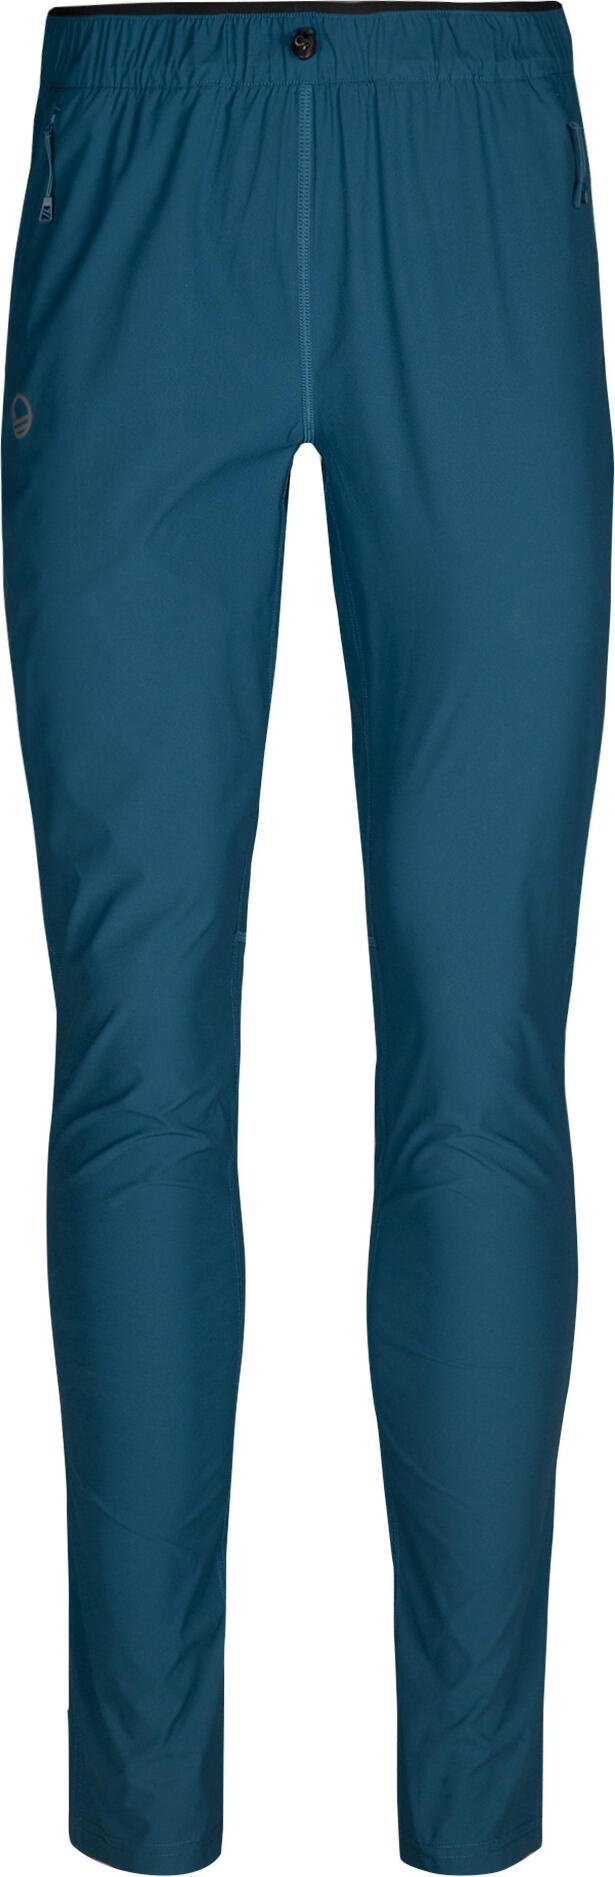 Halti Urbanite Women's Training Lite Pants moroccan blue (B36) 42